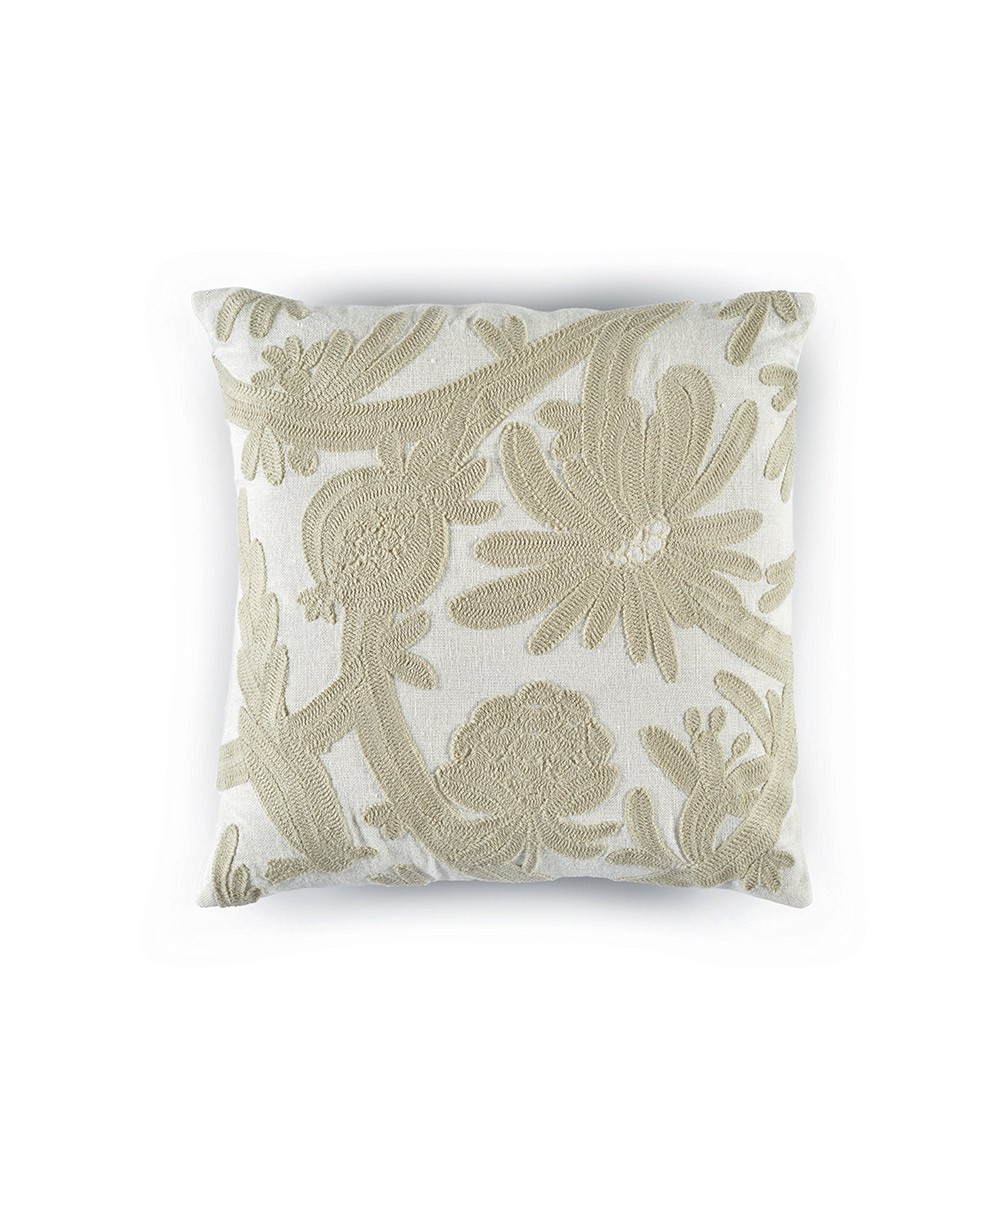 Embroidered linen pillow Paradis